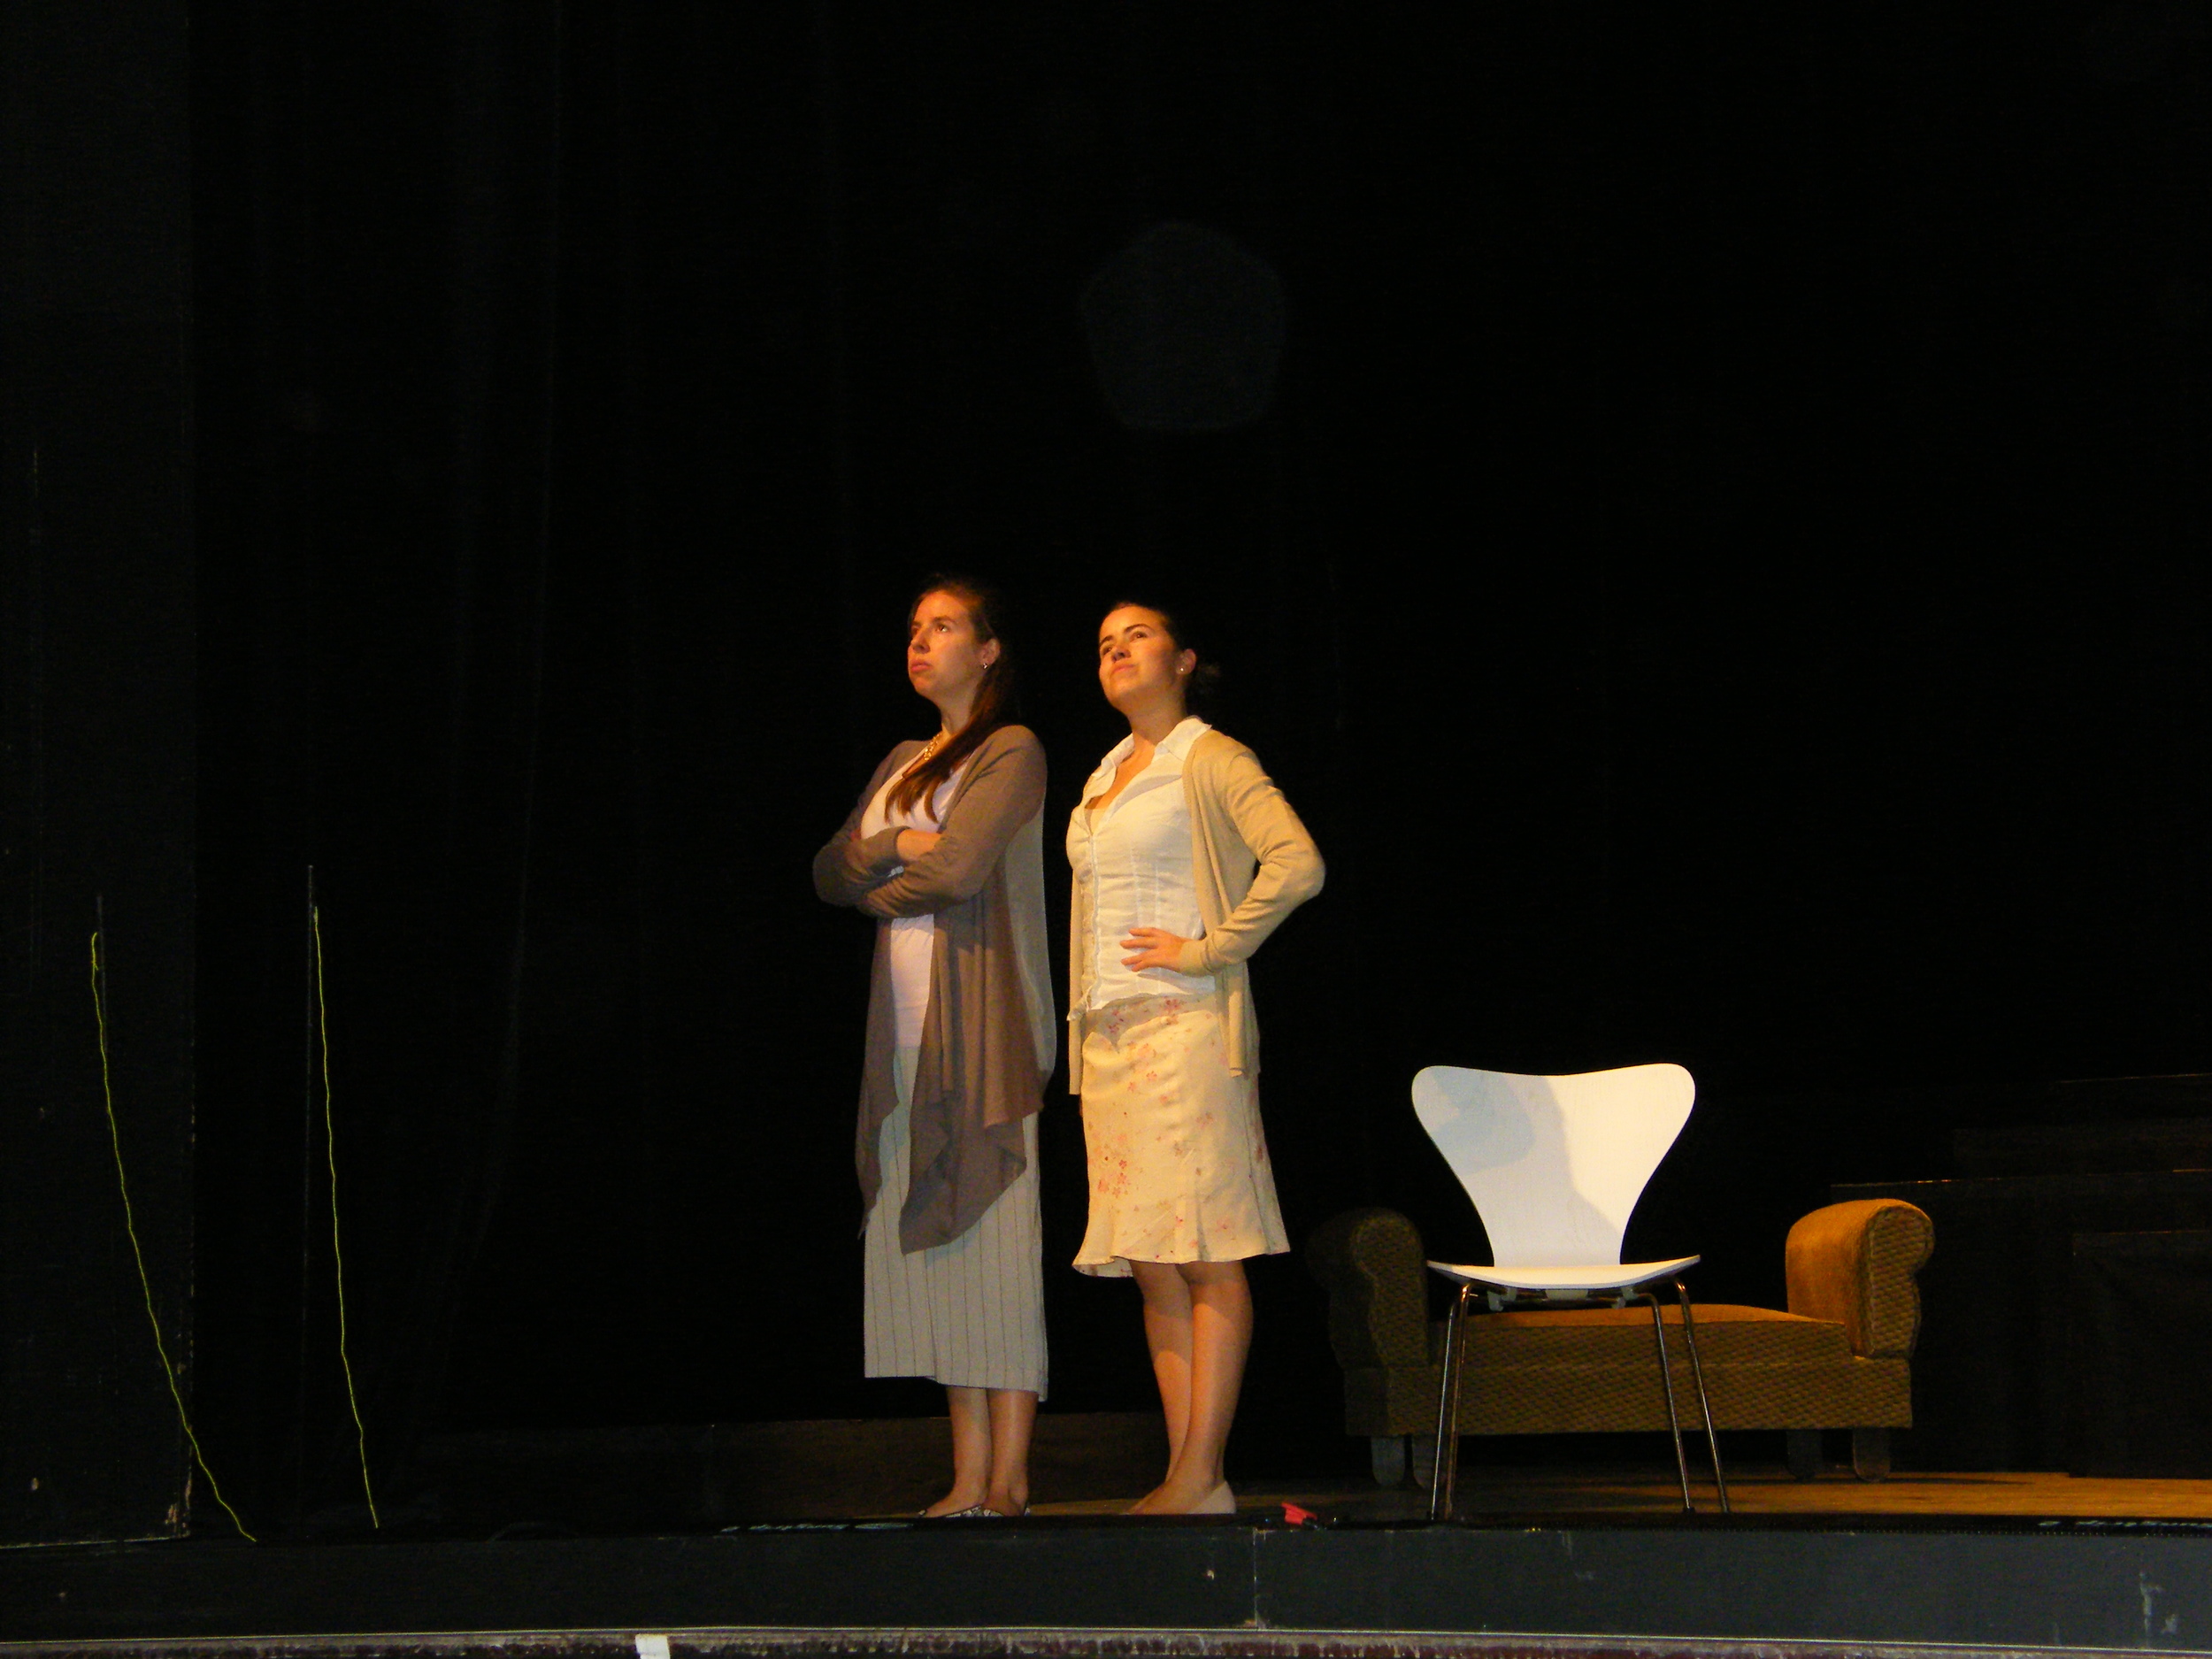 Dress rehearsel 'Le nozze di Figaro' - Susanna (Elsi Spanoghe) and Marcellina (Marijke Tielemans- De Bolle) (November 2015)